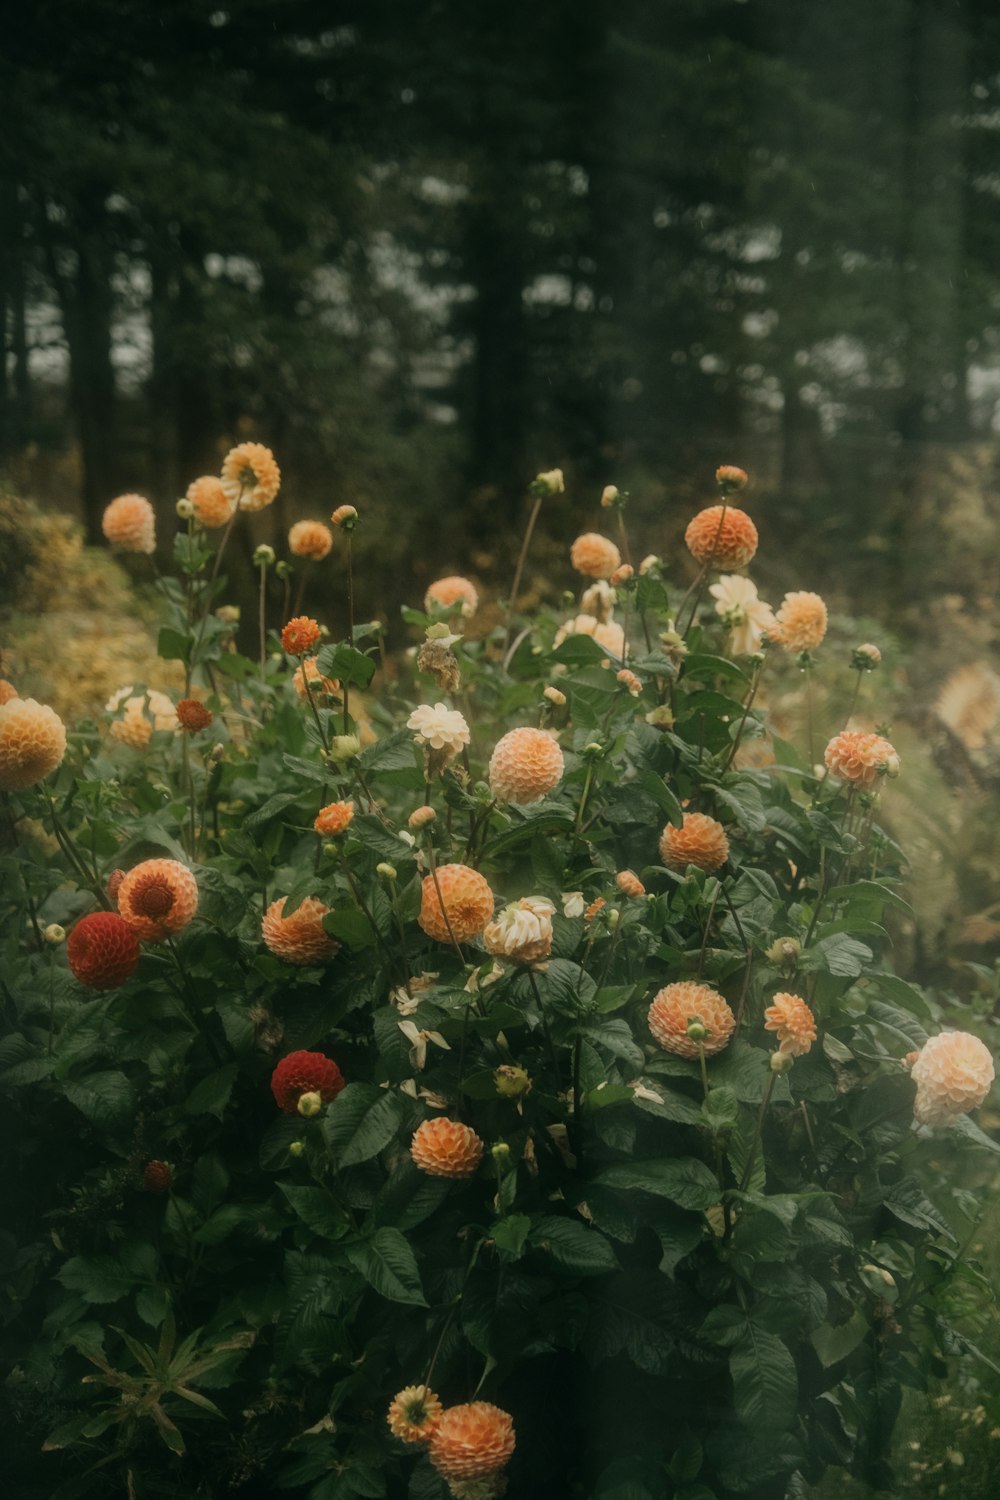 a bush with orange flowers